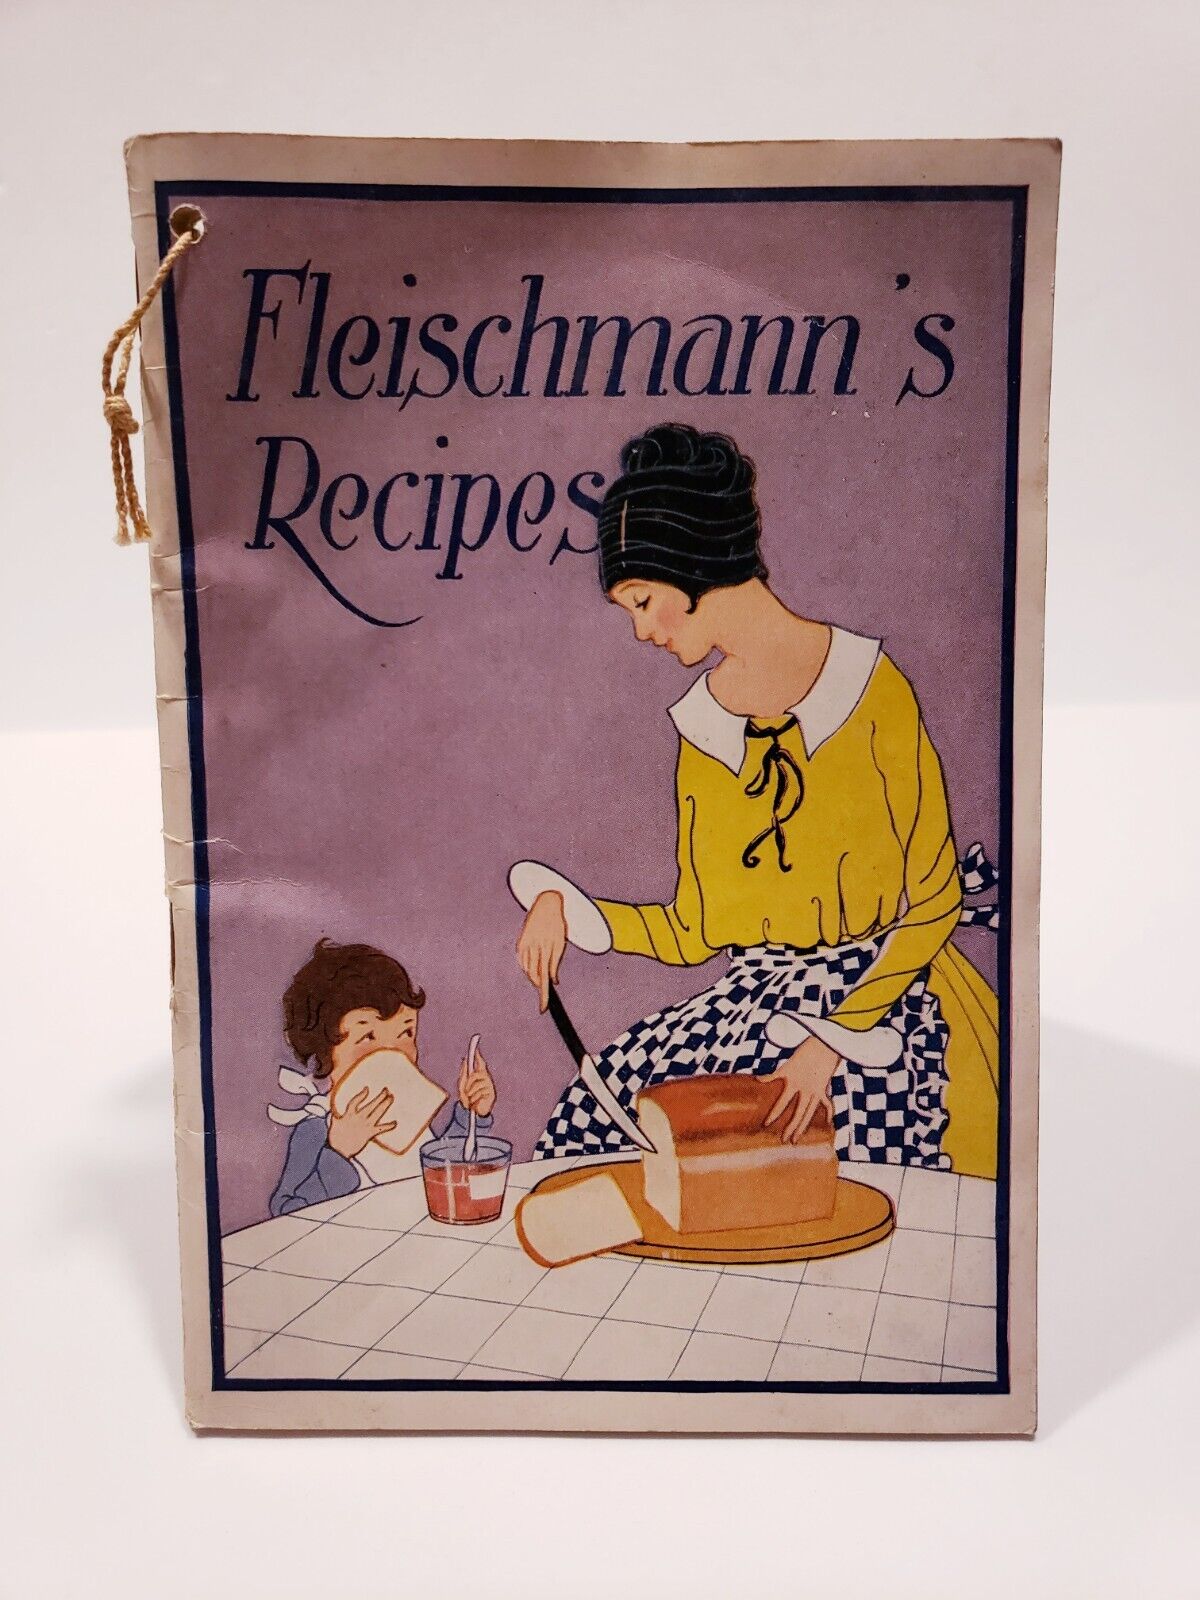 1917 - Fleischmann's Recipes - Advertising Booklet - Baking Raised Breads